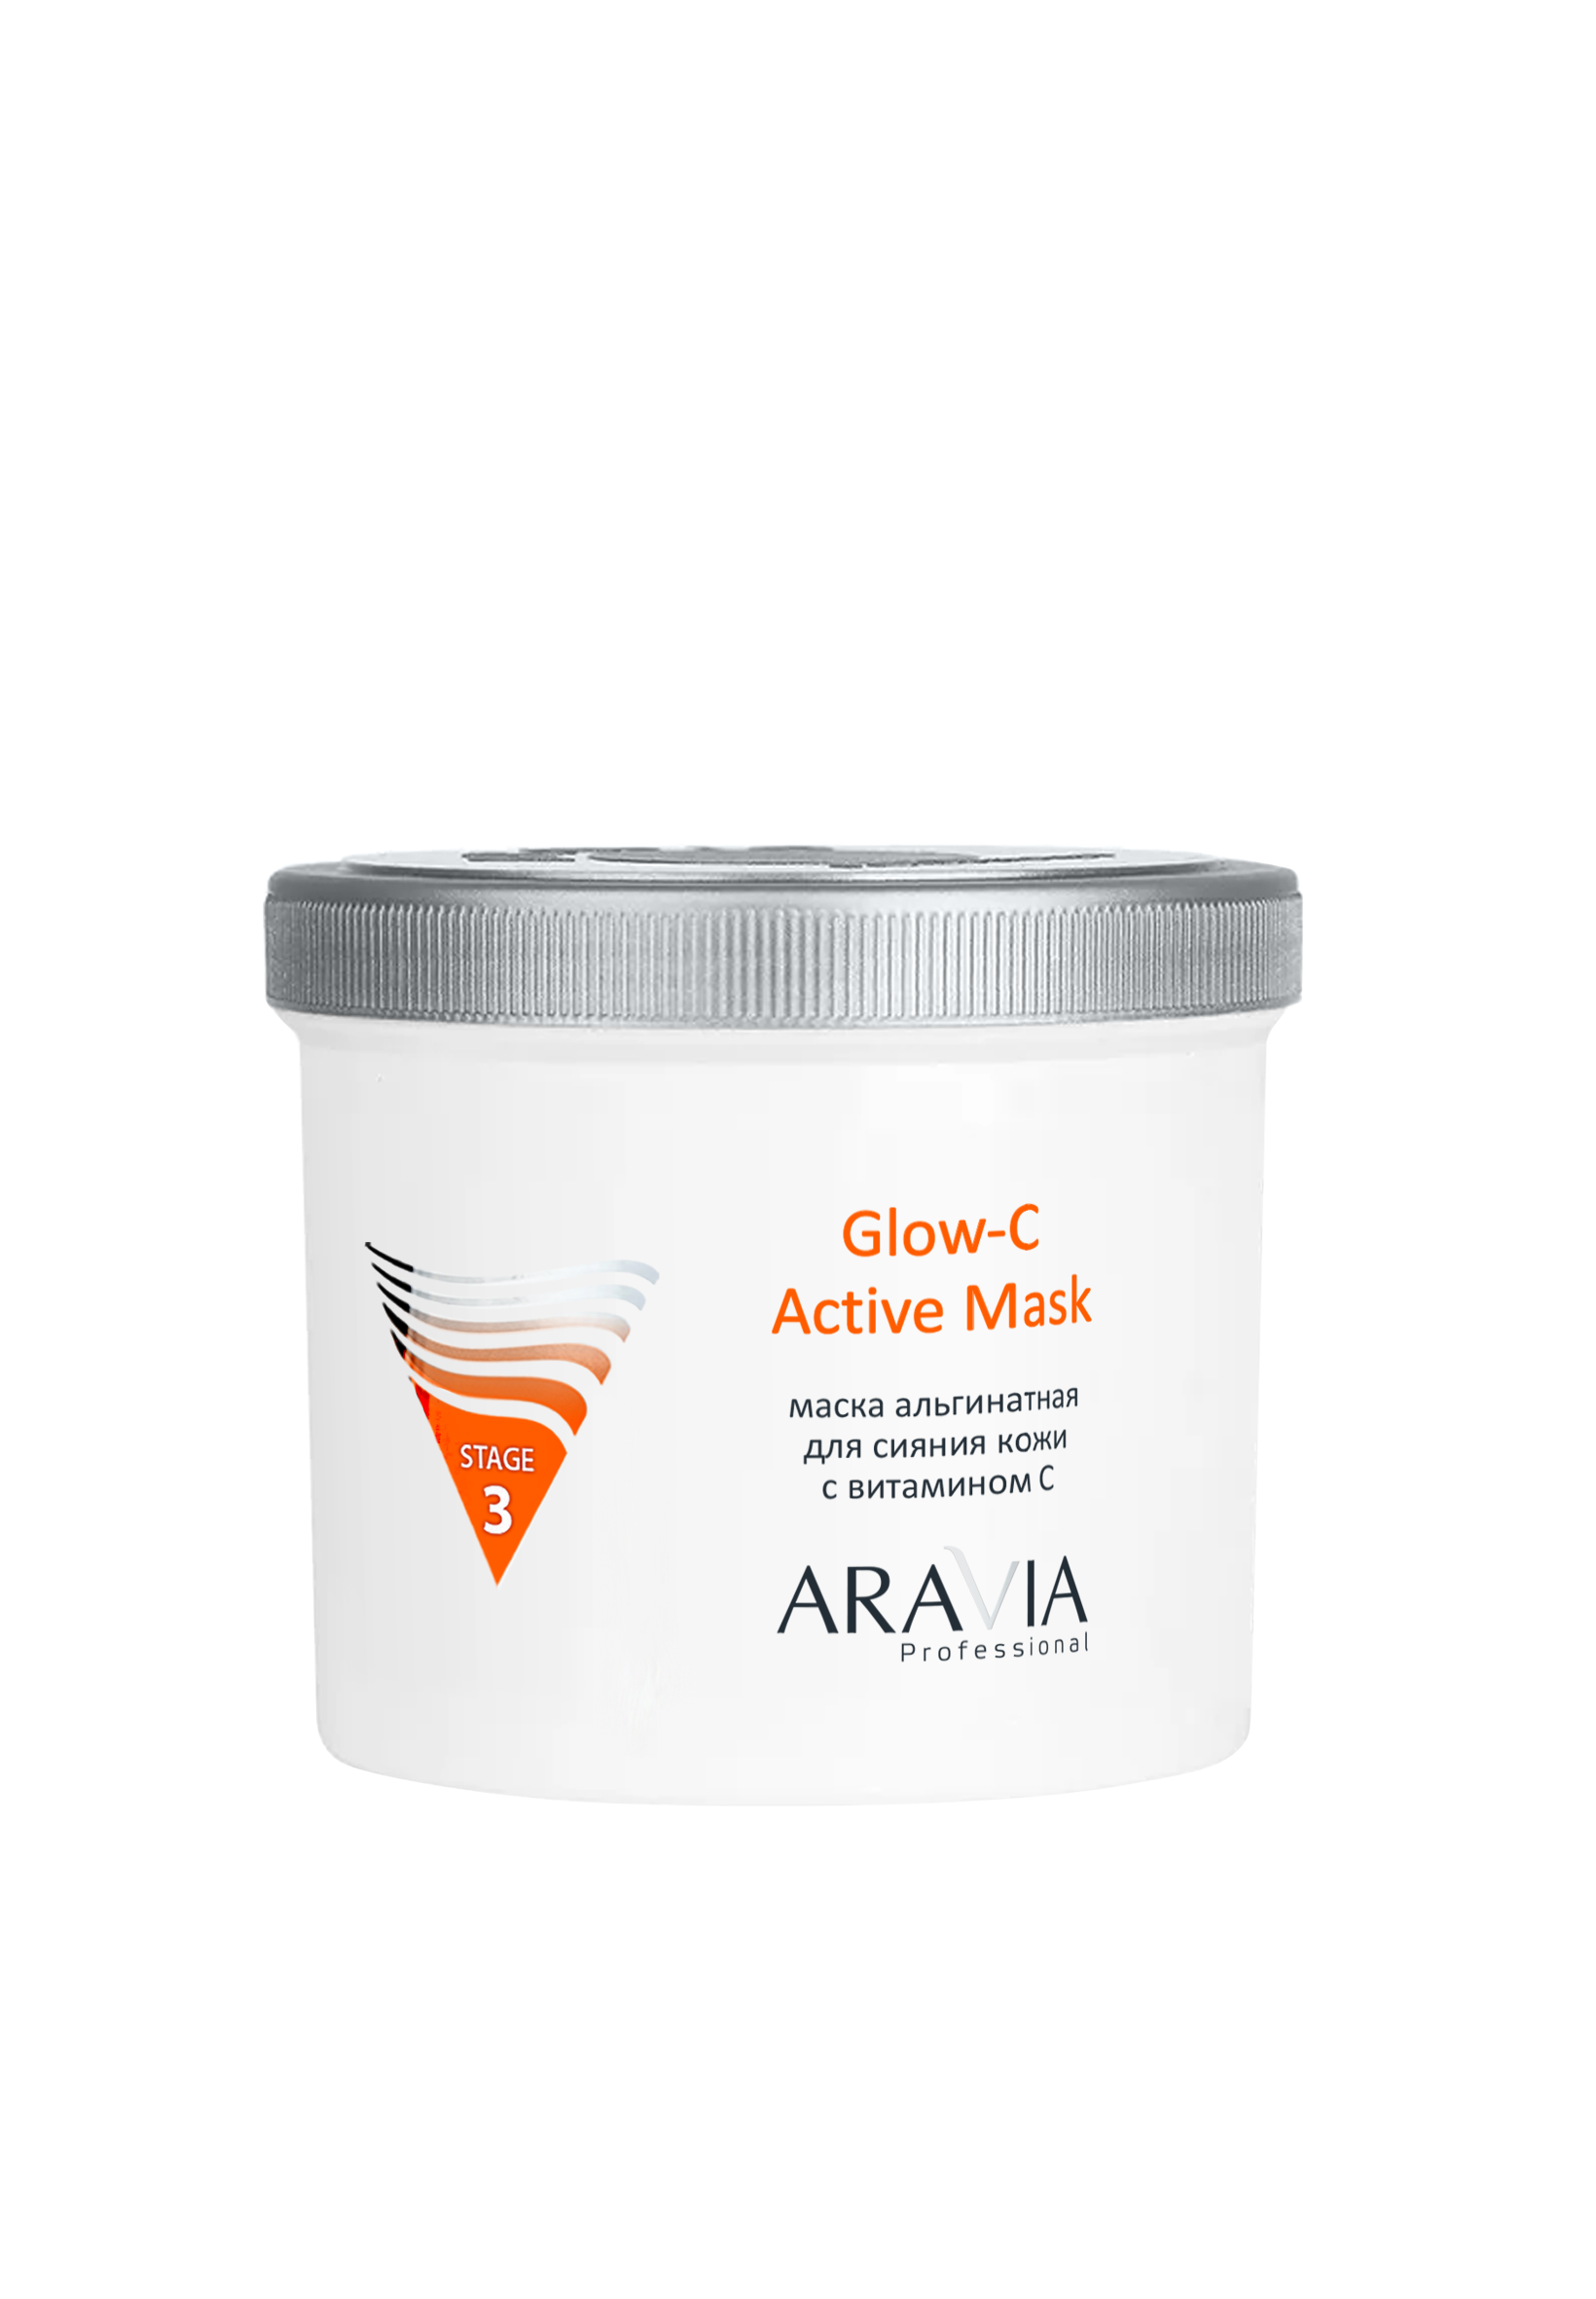 ARAVIA Professional Альгинатная маска для сияния кожи с витамином С Glow-C Active Mask, 550мл